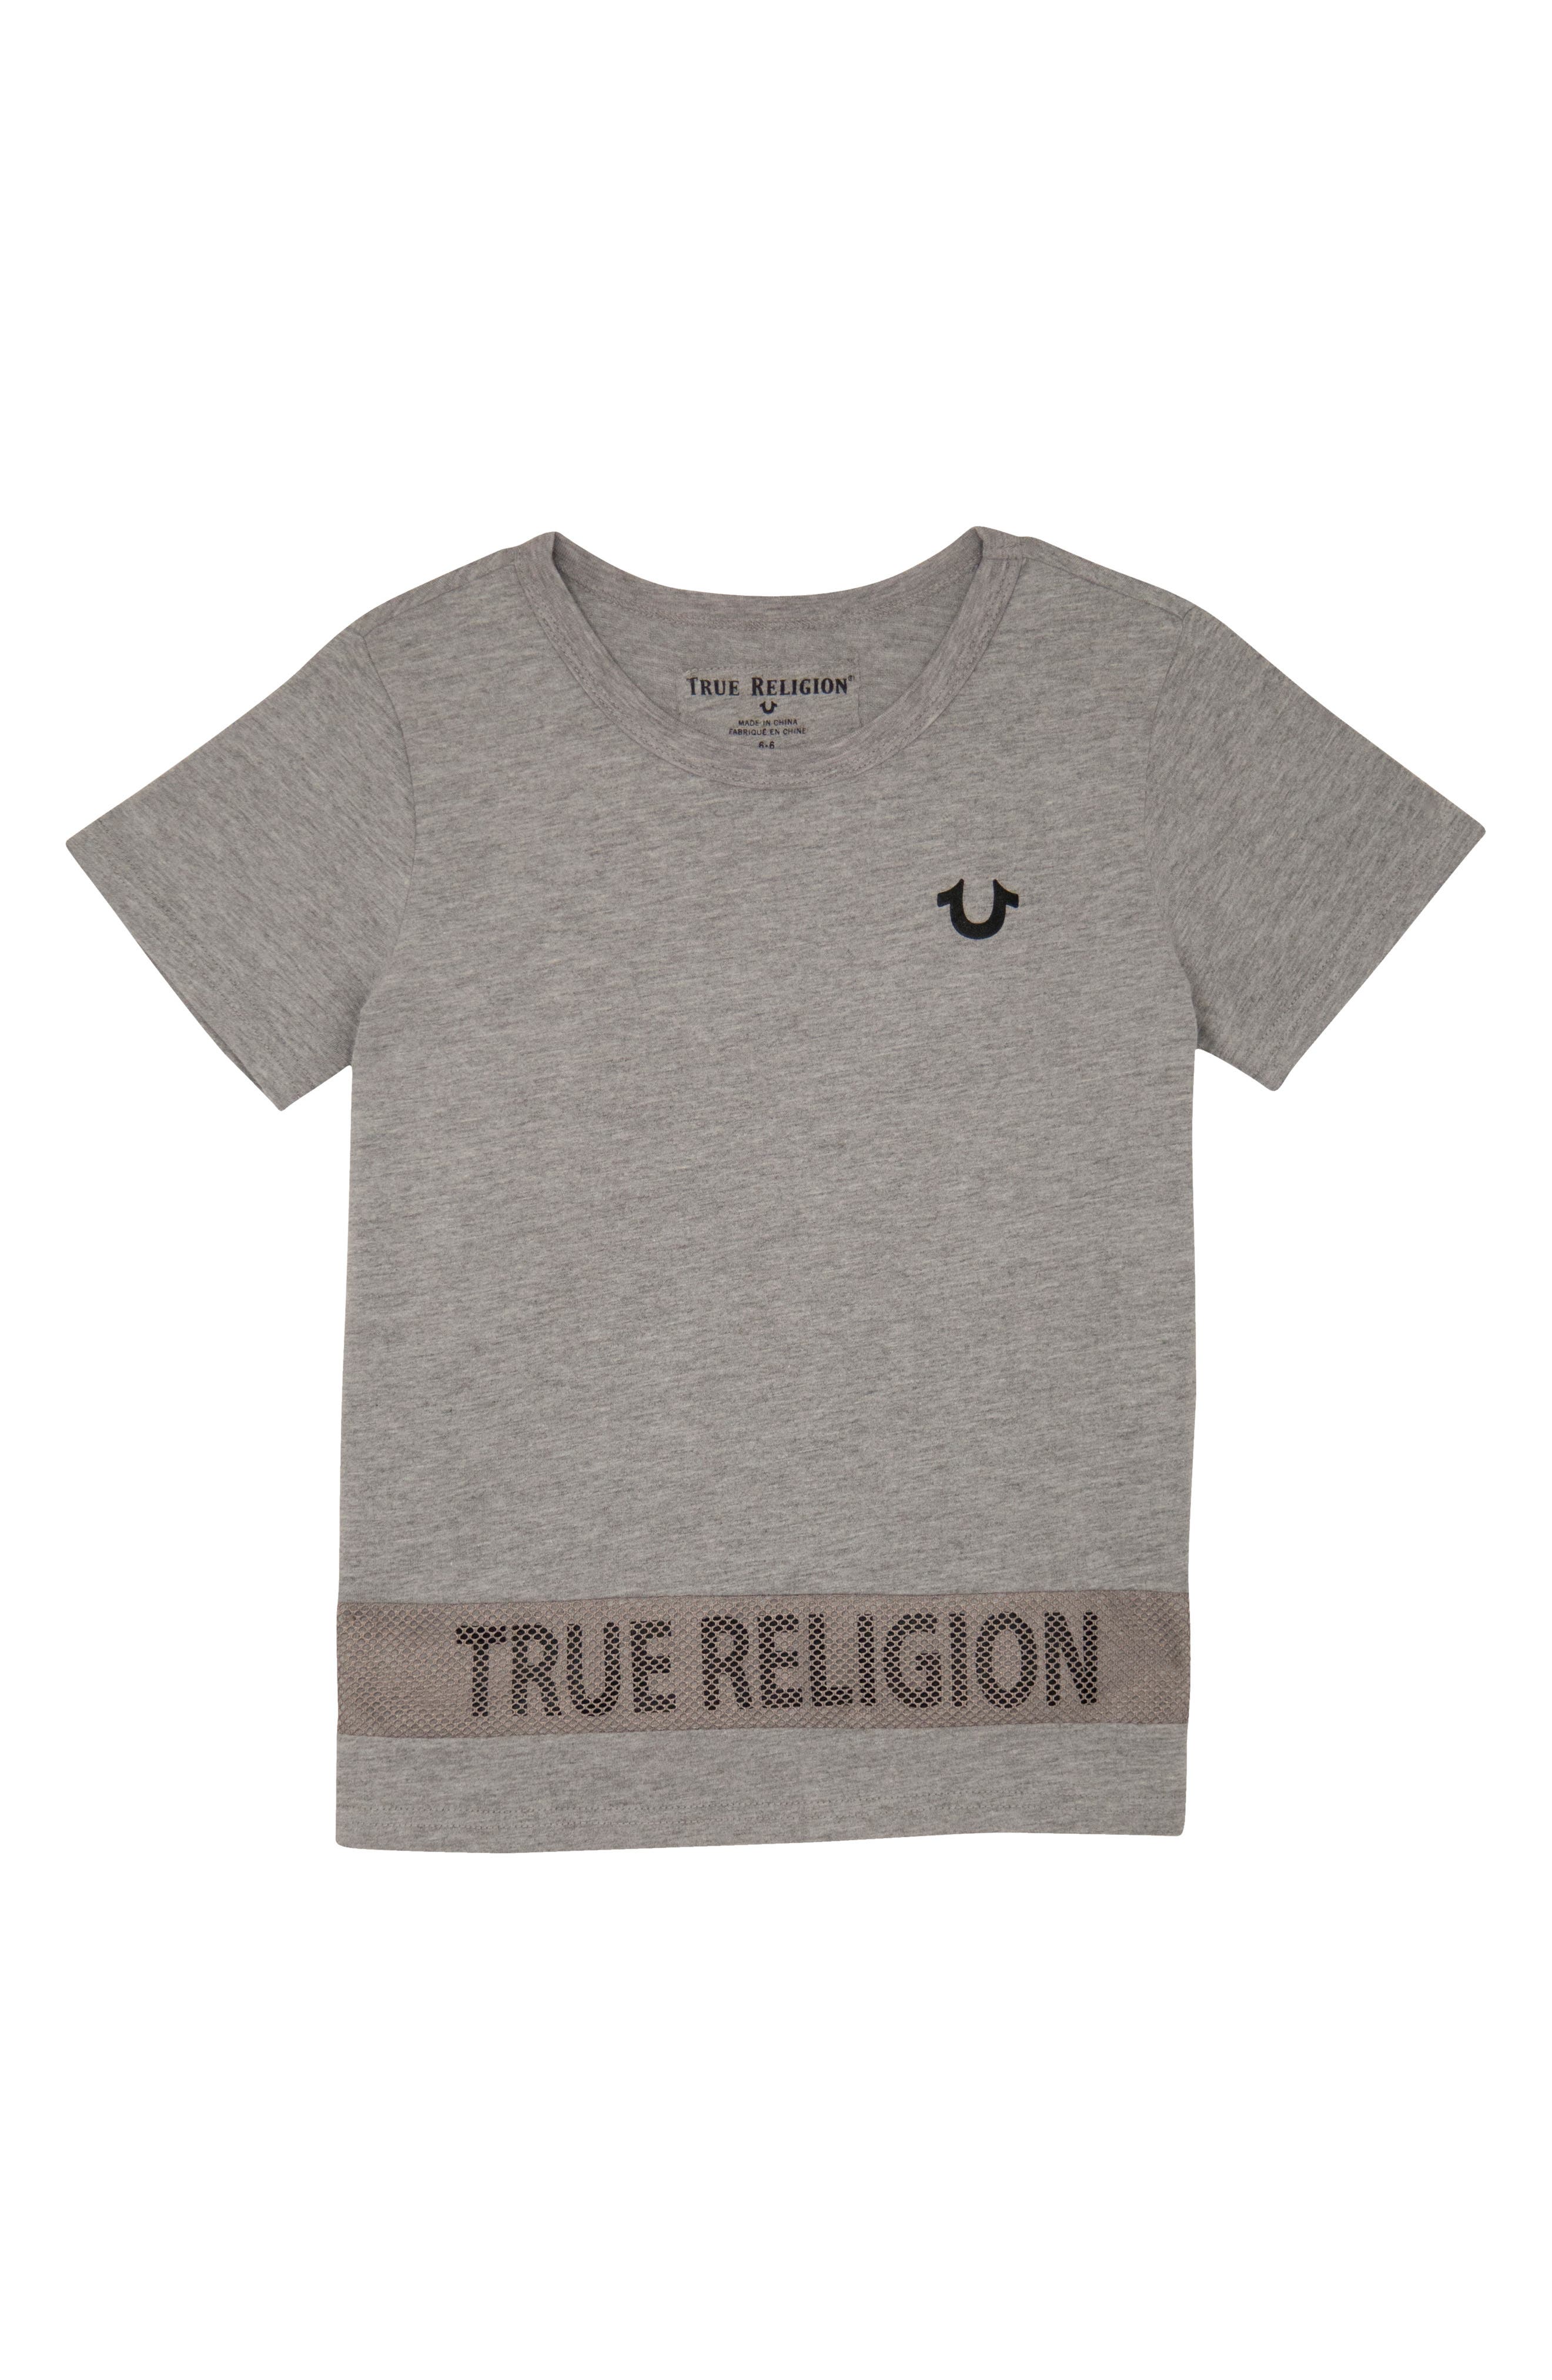 religion brand t shirts